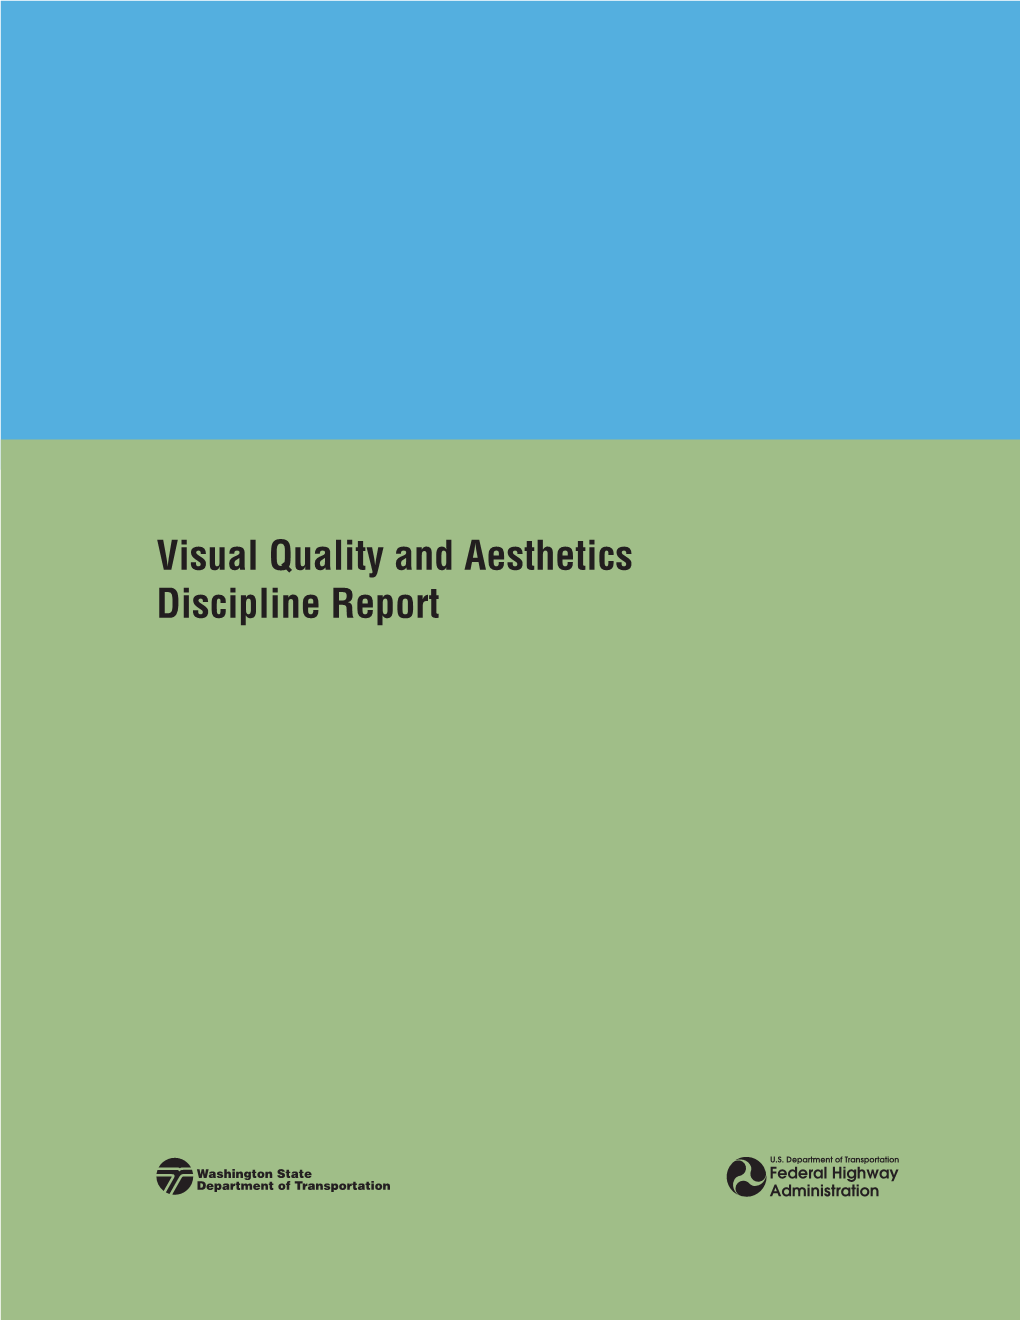 SR 520 SDEIS Visual Quality and Aesthetics Discipline Report